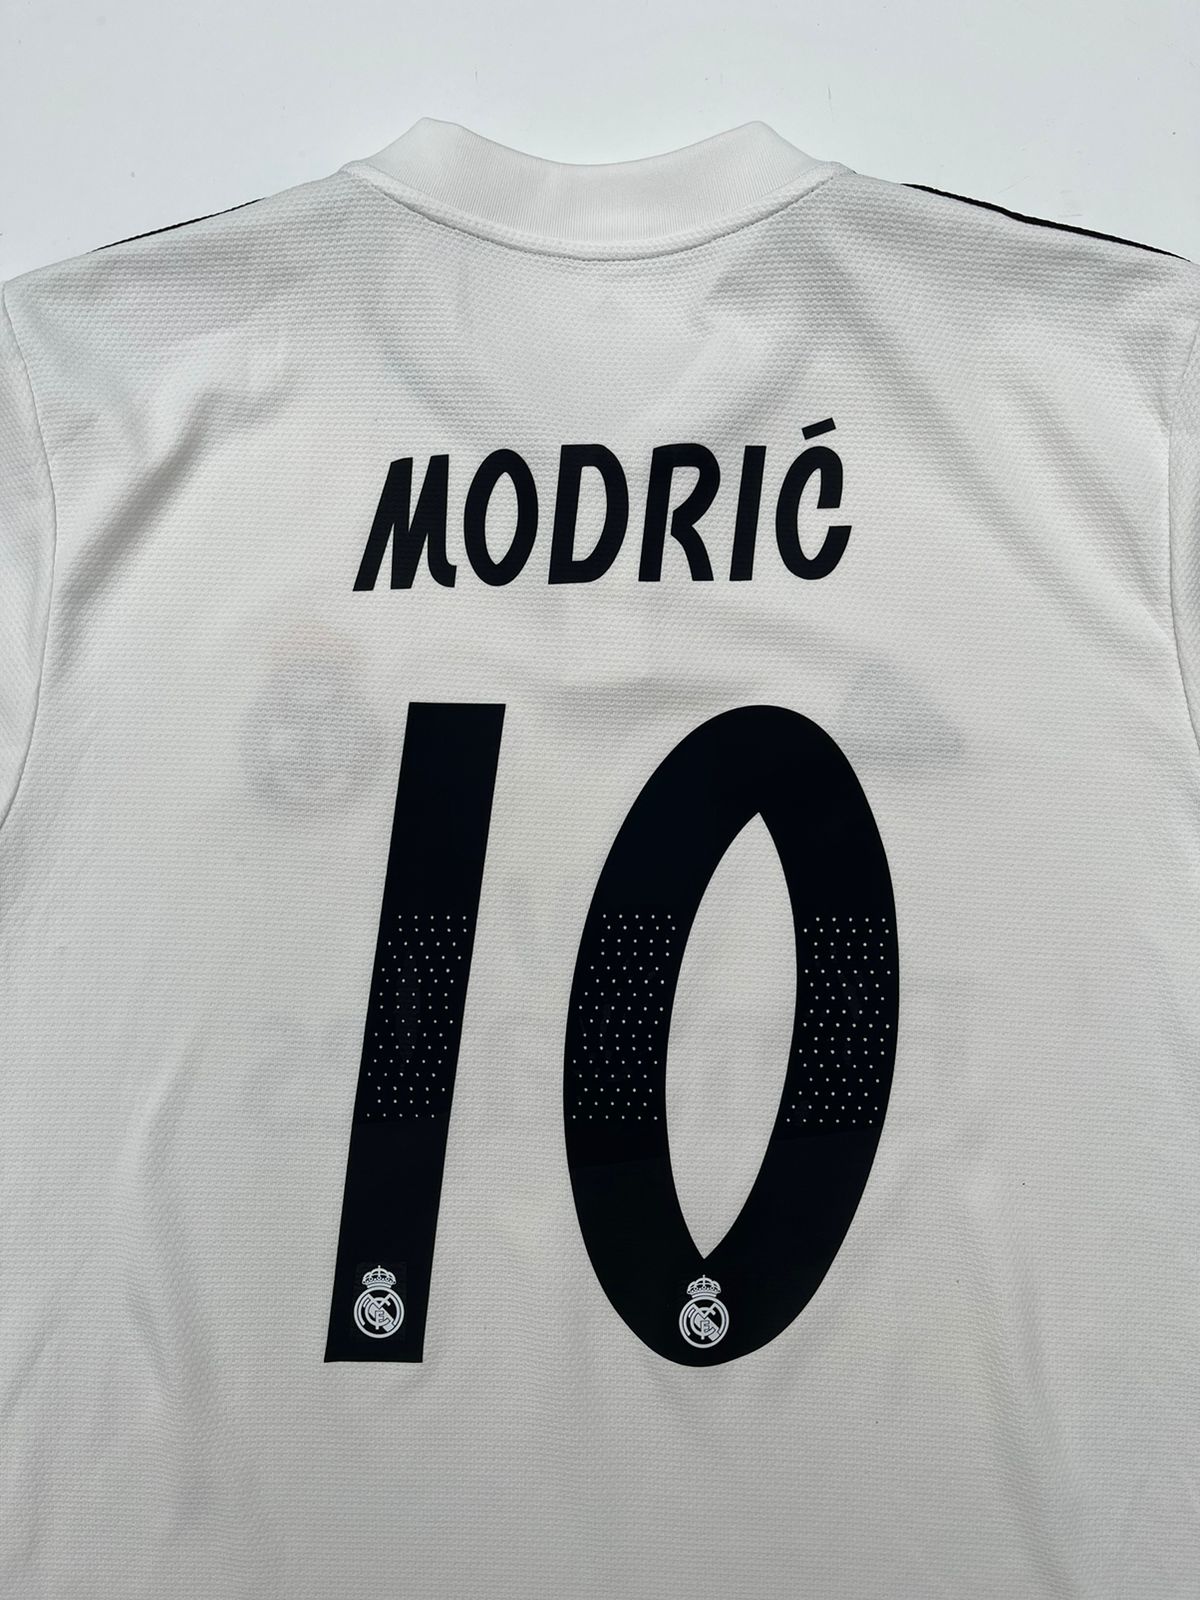 Jersey Real Madrid Local 2018 2019 Luka Modric (L)